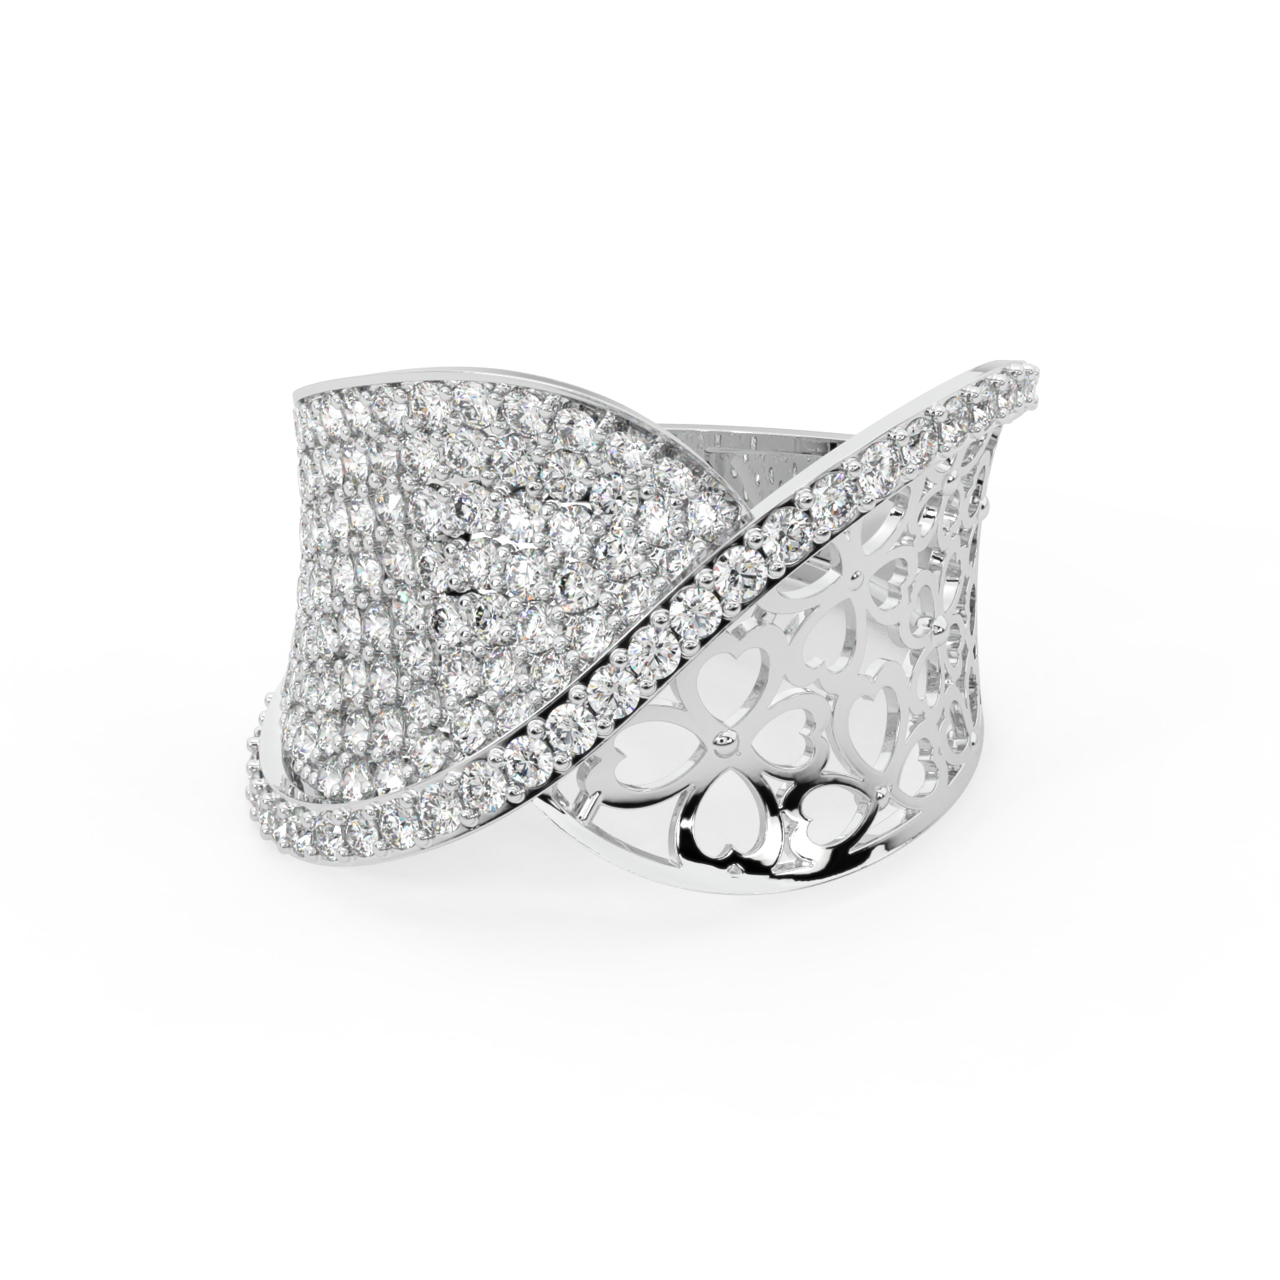 Floral Braid Gold Diamond Ring